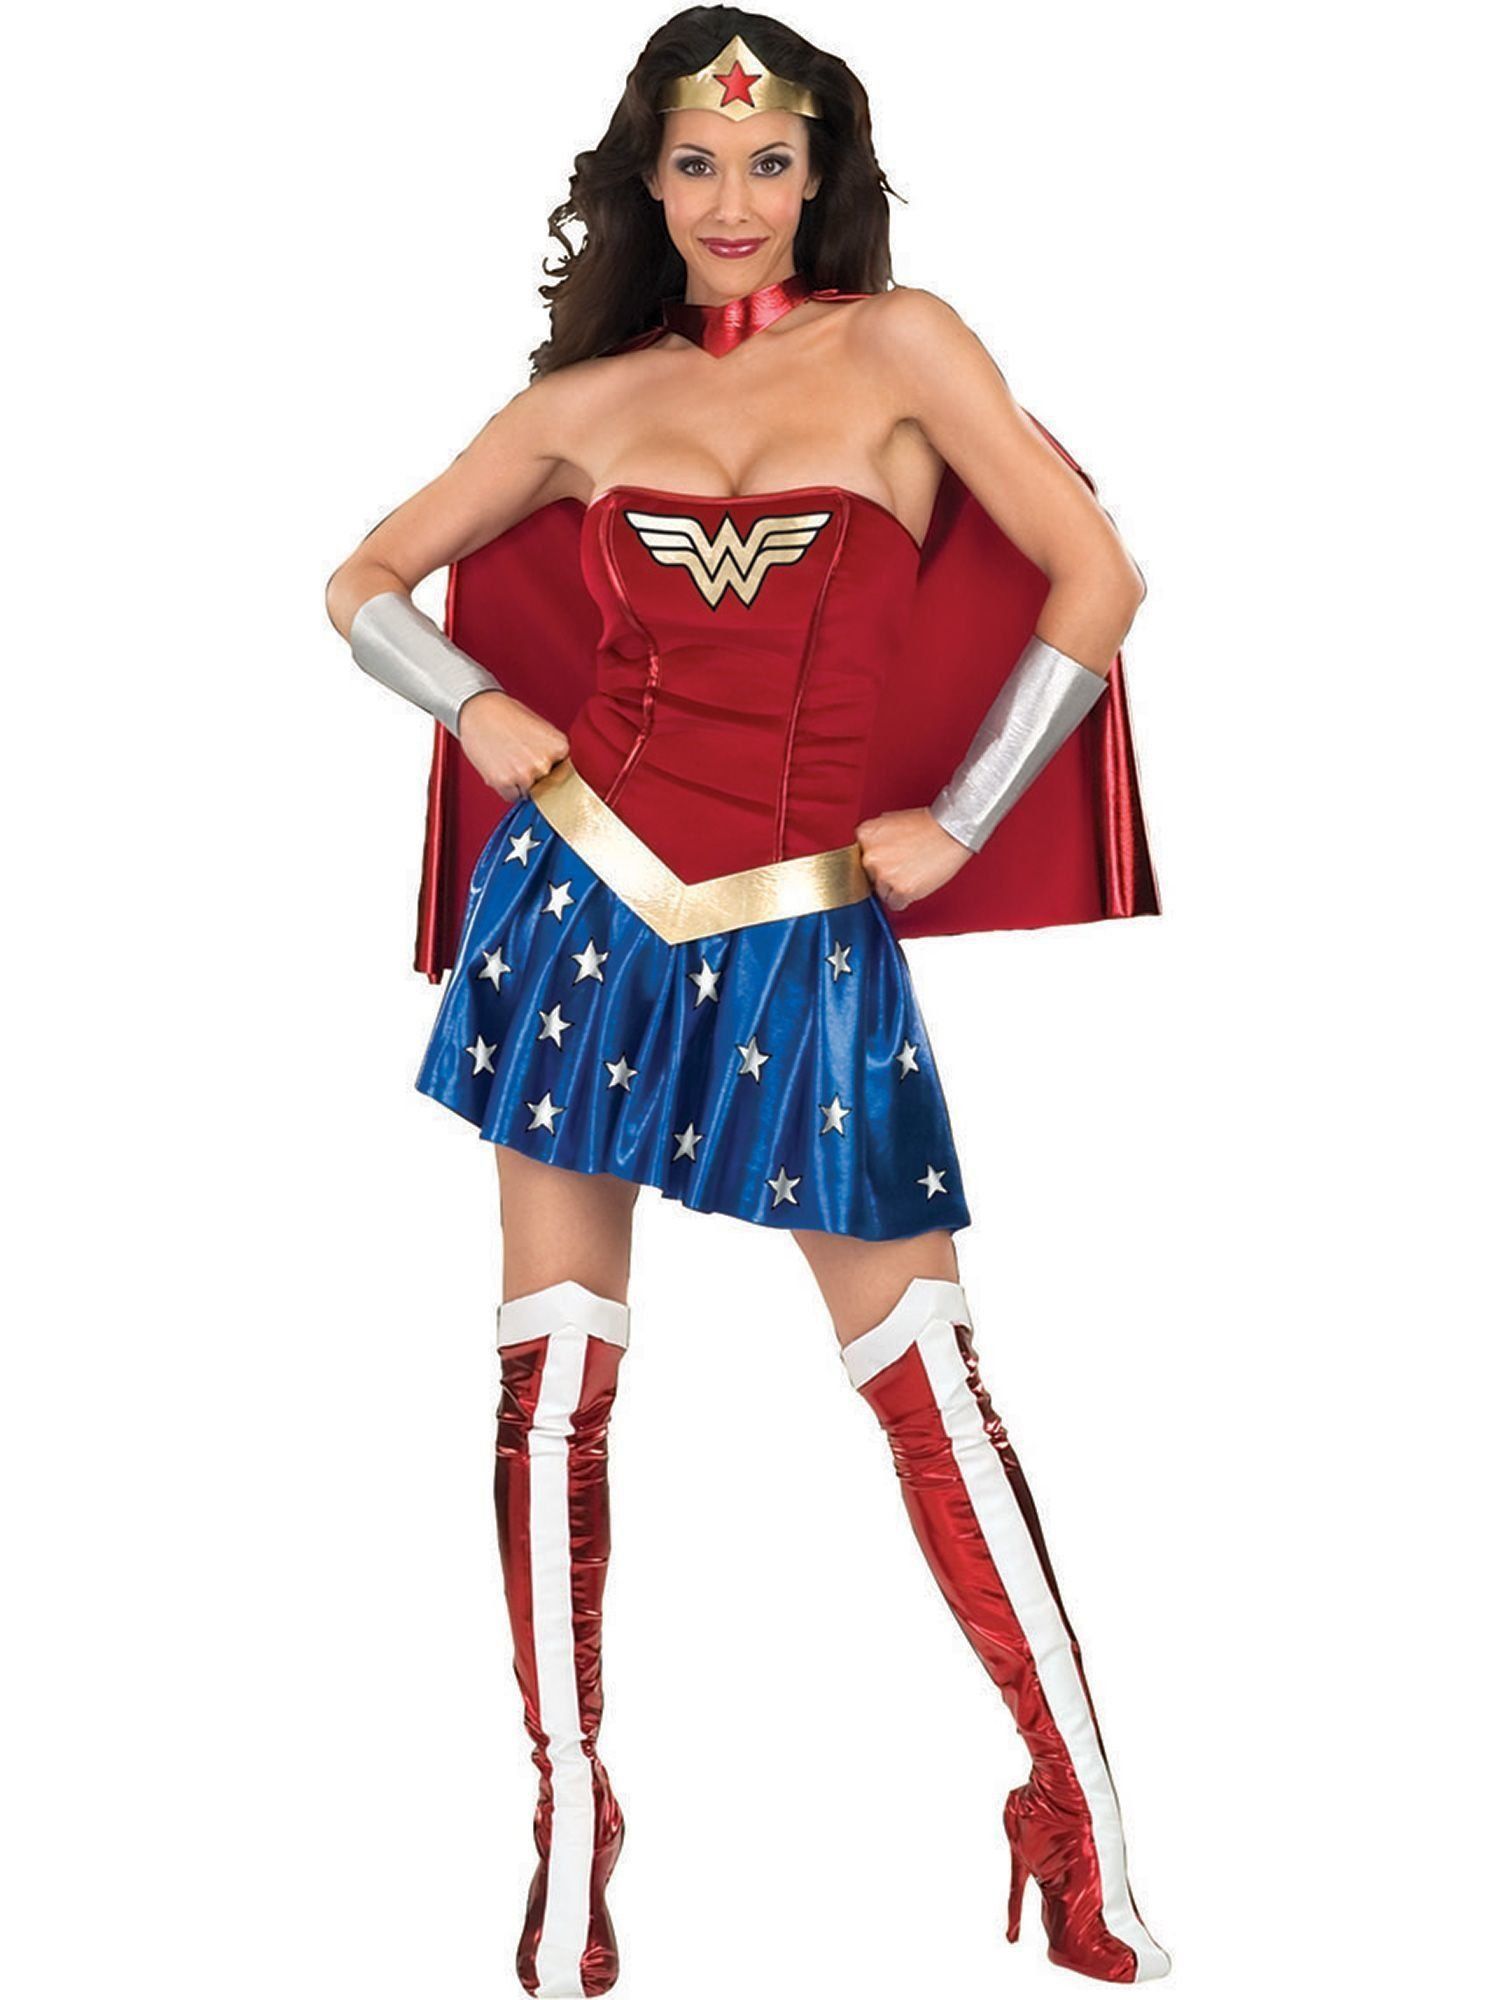 Fantasia Adulto Feminino: Mulher Maravilha (Wonder Woman) (Apenas Venda Online)